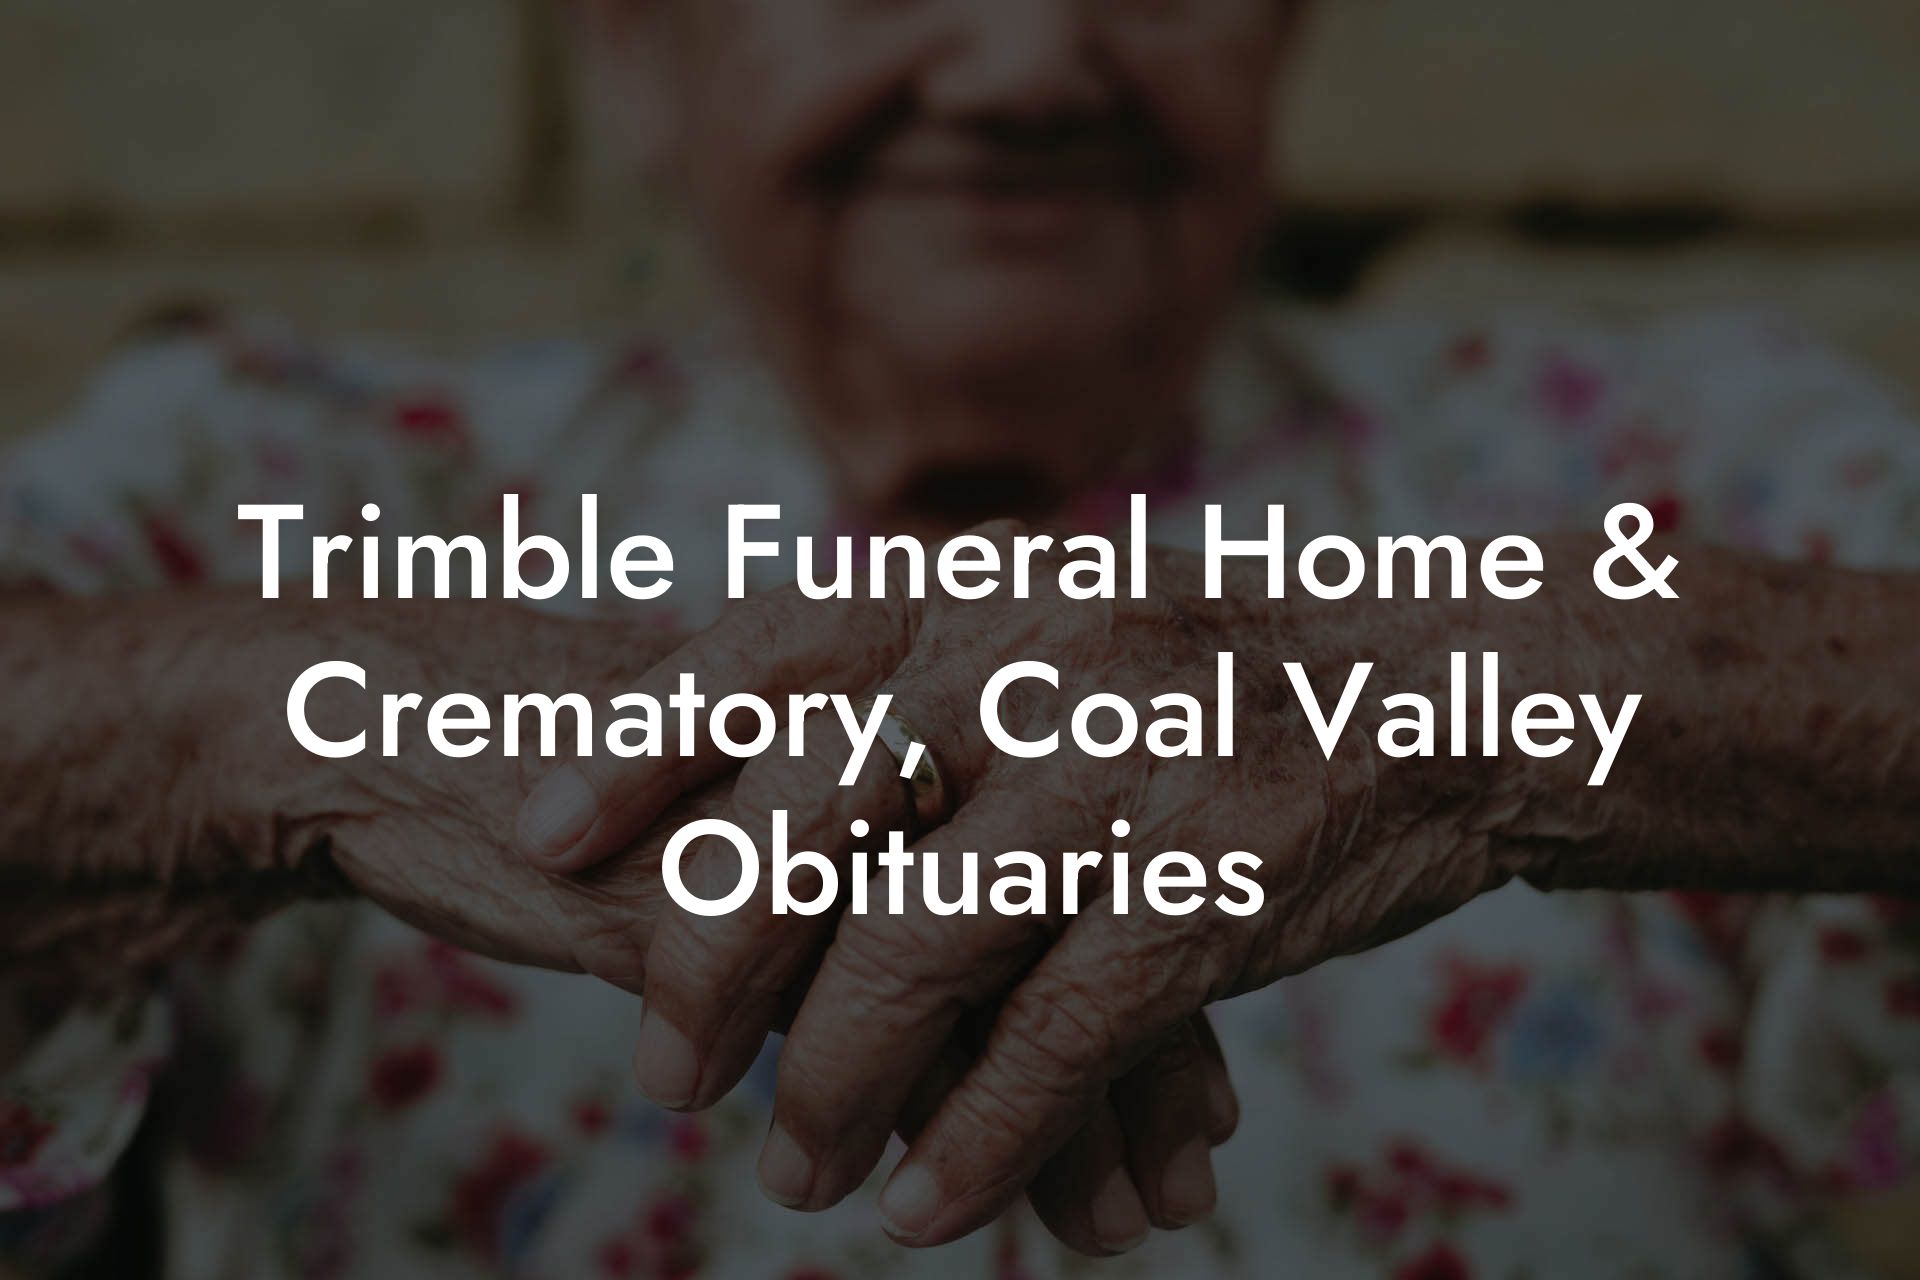 Trimble Funeral Home & Crematory, Coal Valley Obituaries